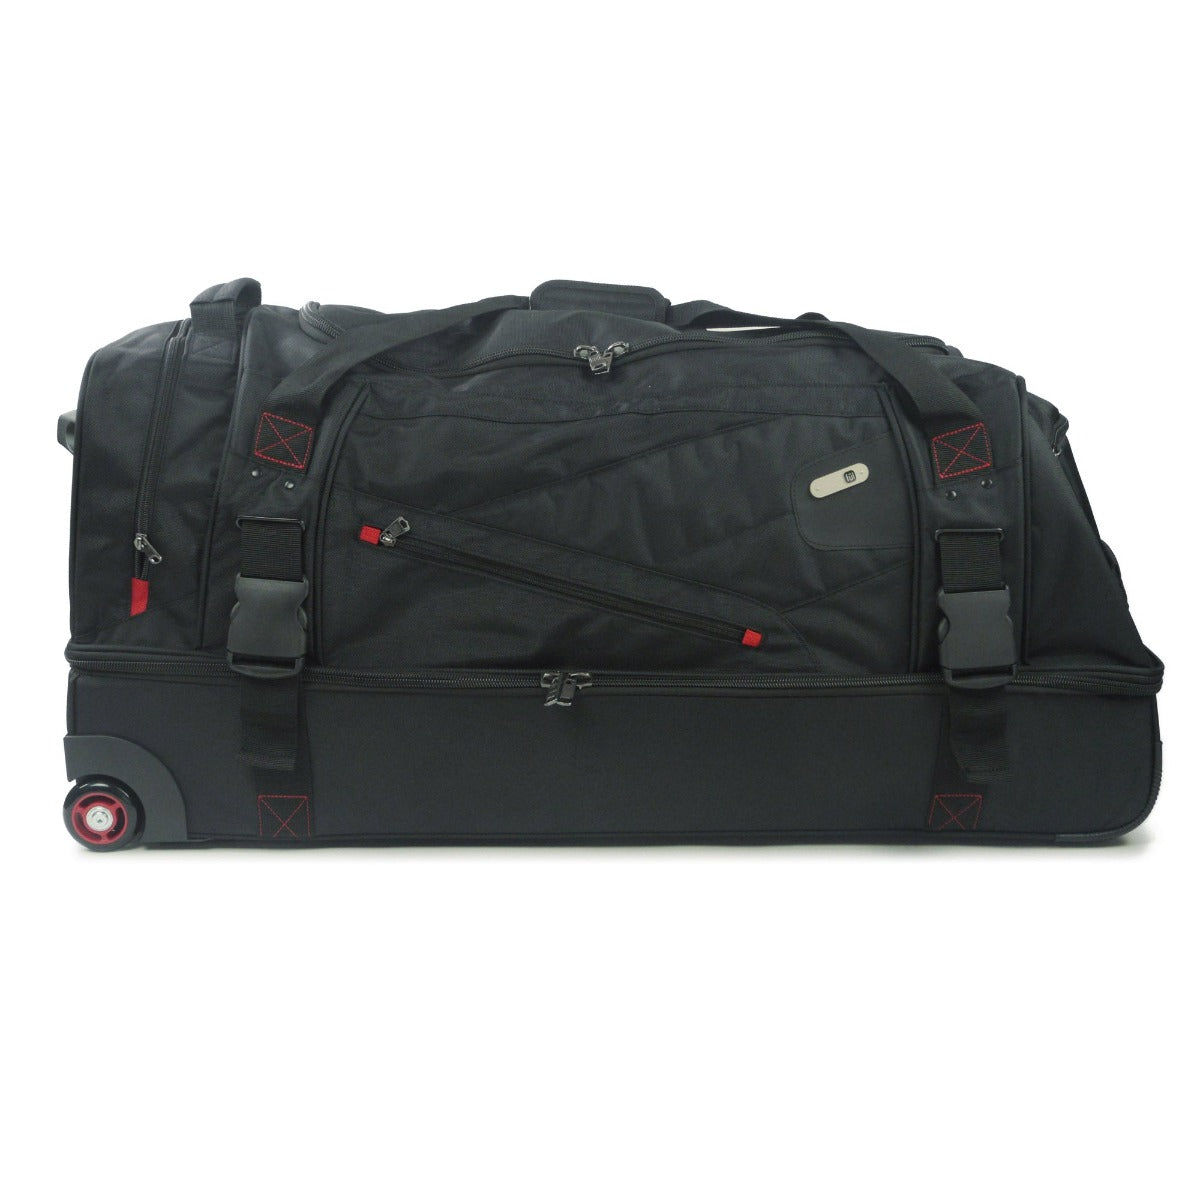 Tour Manager FŪL 36" large black rolling duffel bag 36-inch wheeled duffle